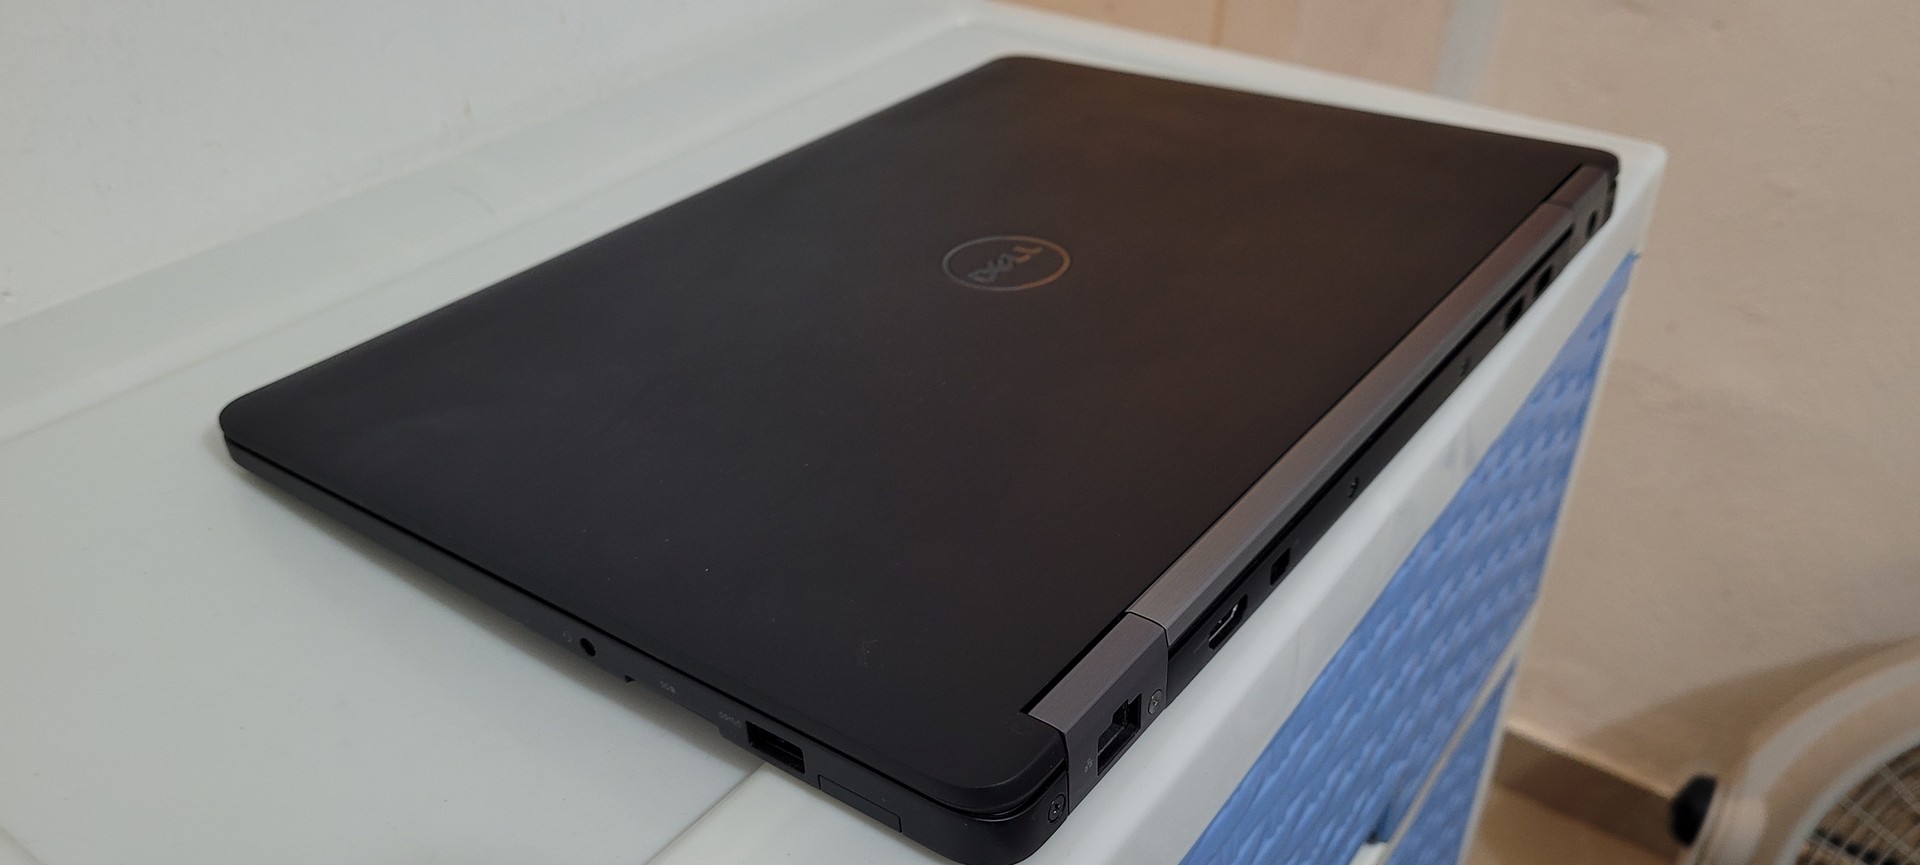 computadoras y laptops - Dell Slim 14 Pulg Core i7 6ta Gen Ram 16gb ddr4 Disco 256gb SSD Video 8gb 2